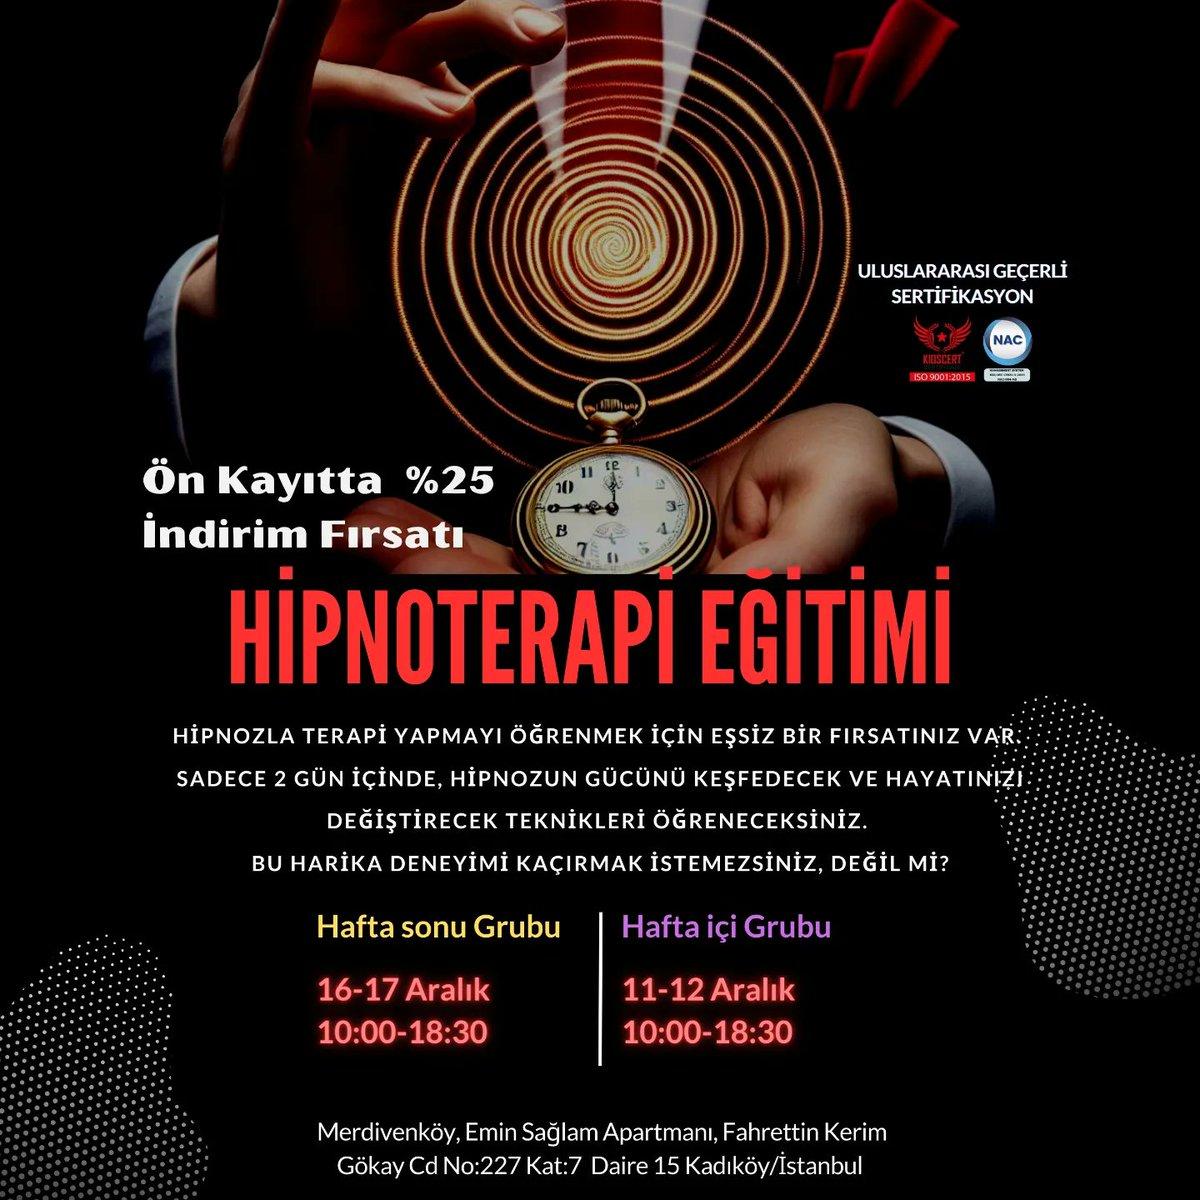 İstanbul Hipnoz (HipnoTerapi) Eğitimi 

#hipnoz
#terapi
#hipnotreapi